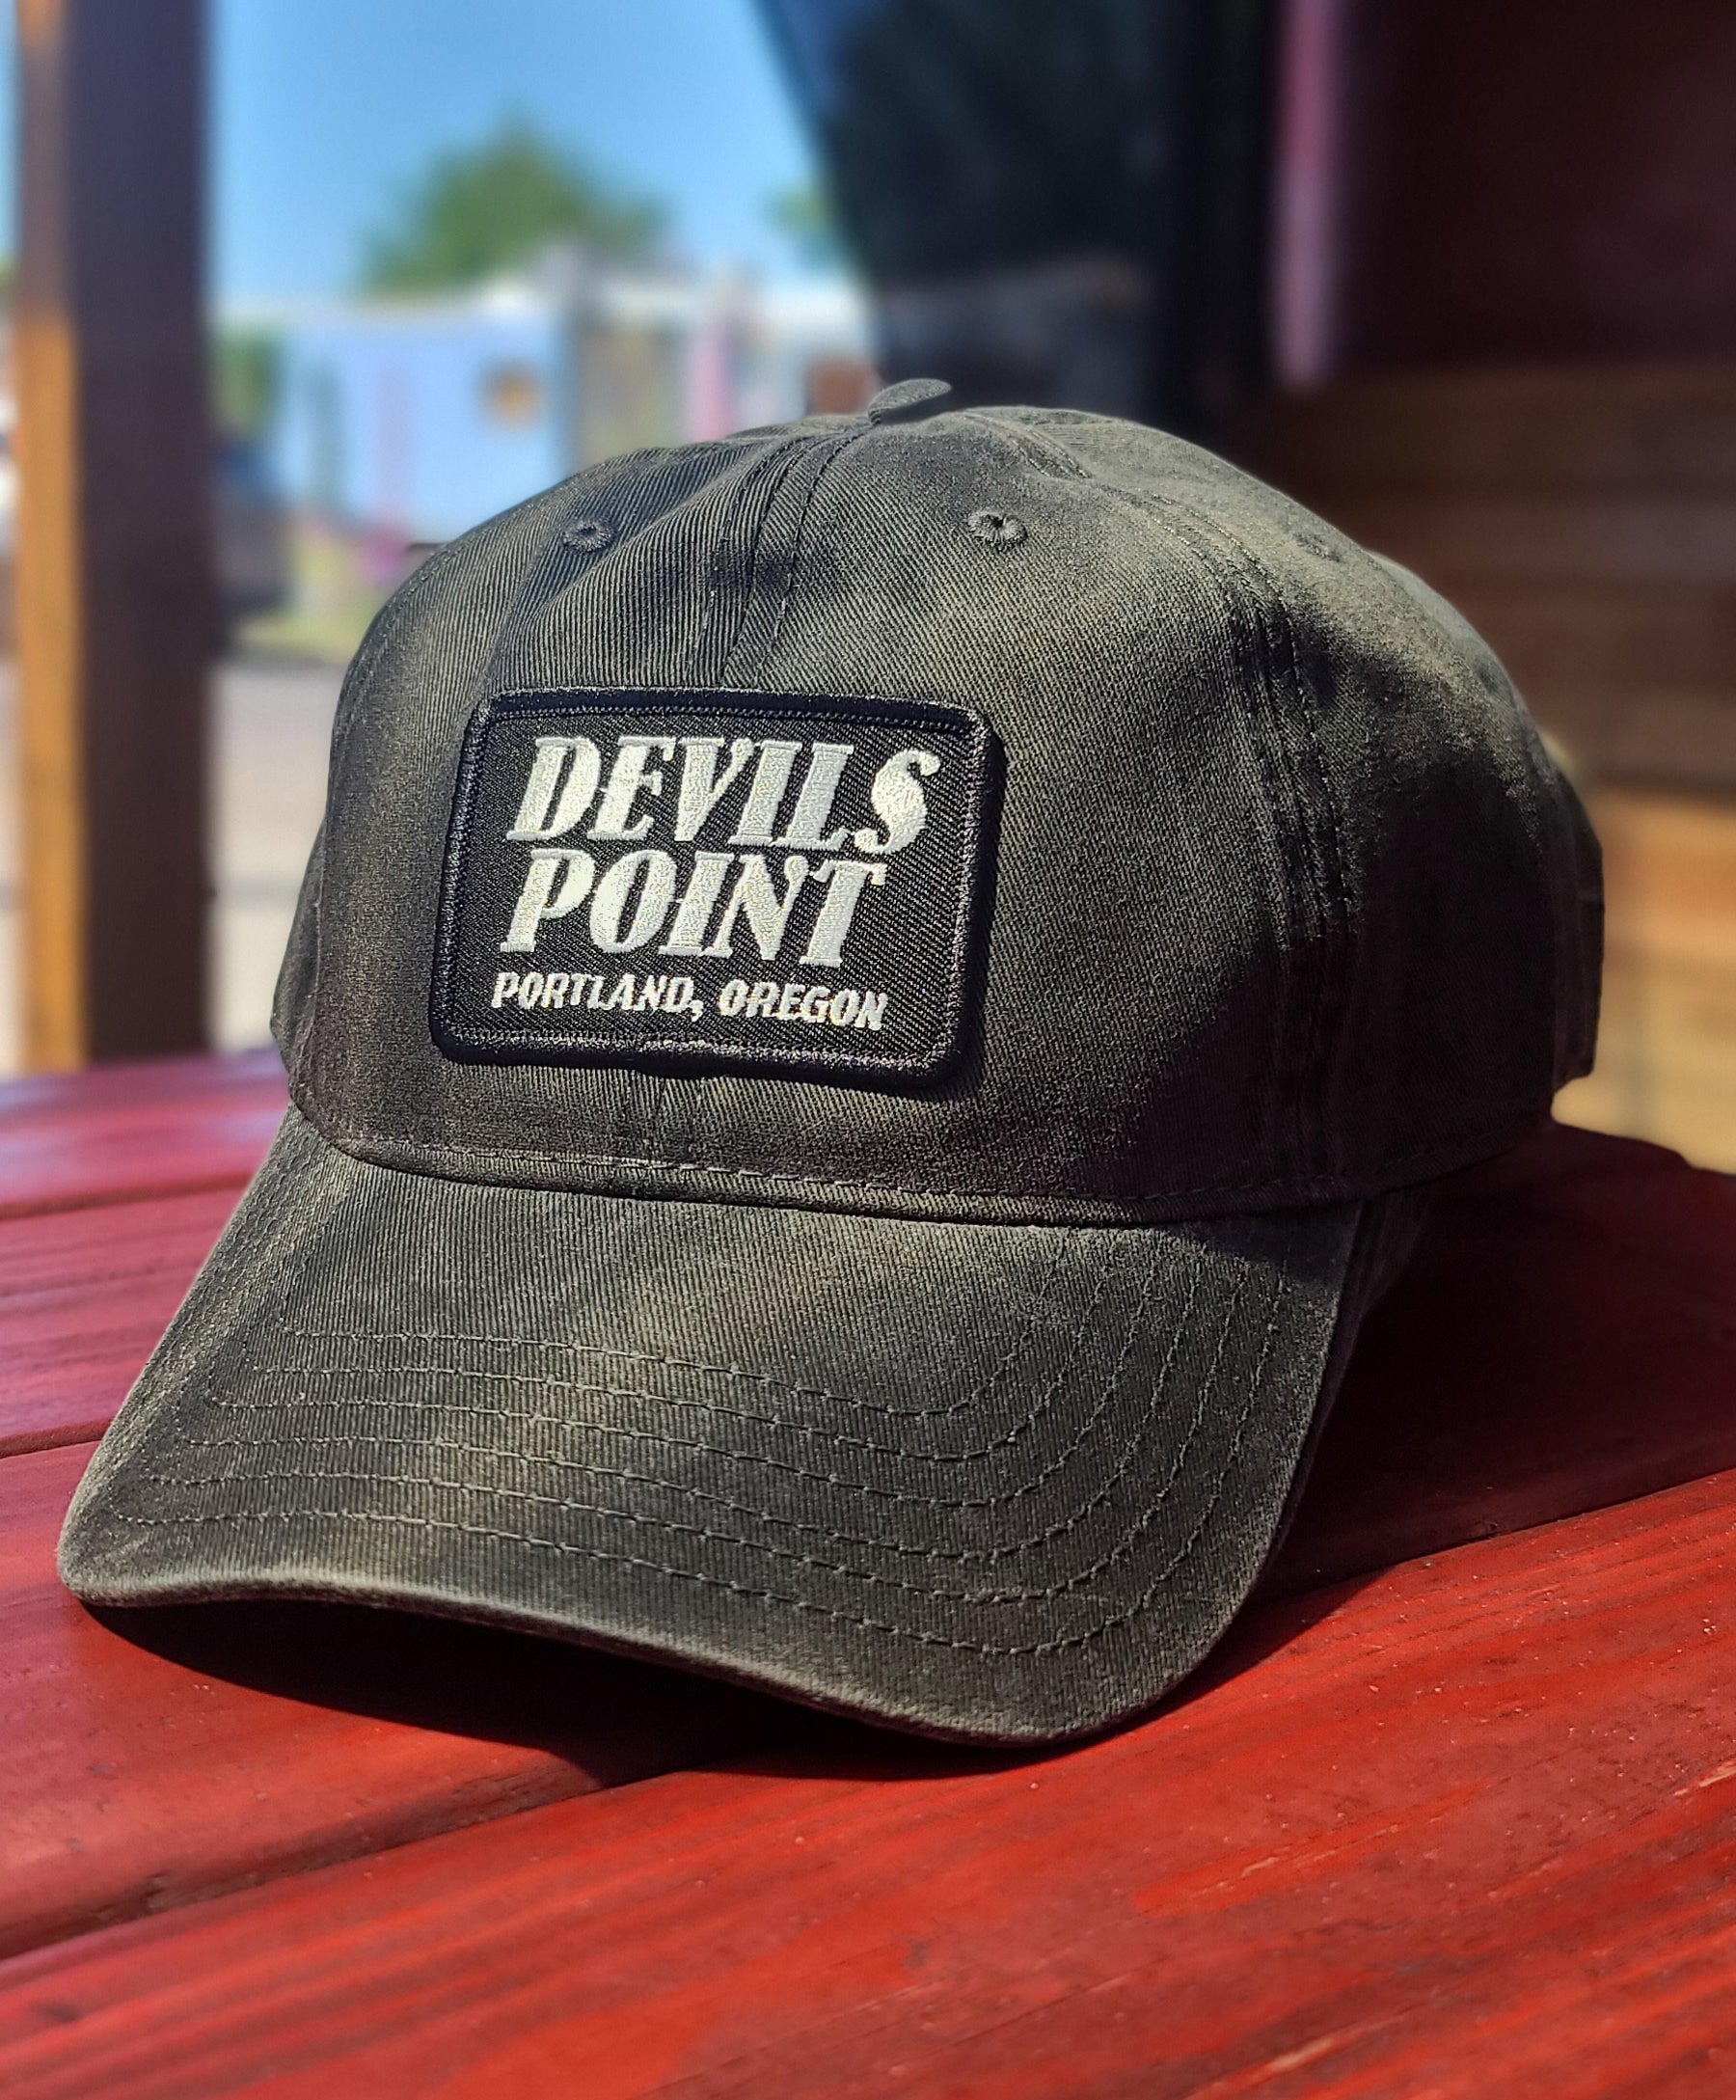 Devils hats